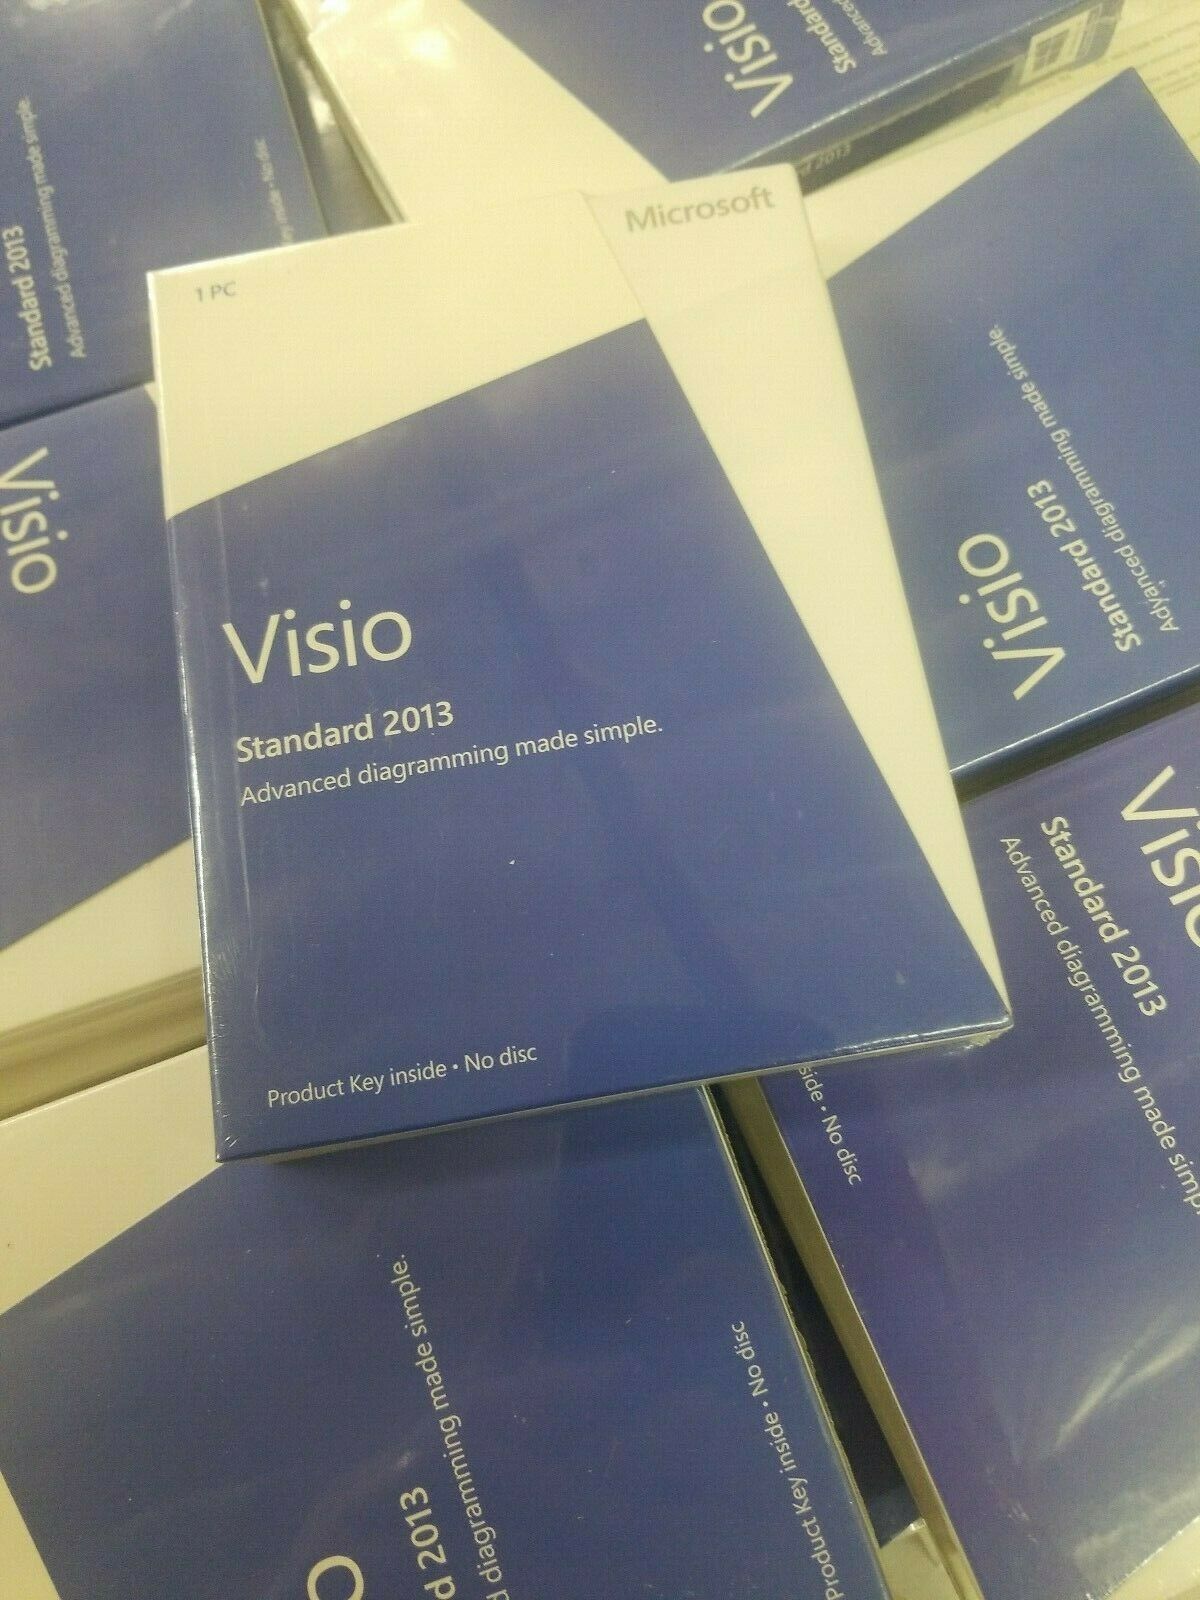 Microsoft Visio Standard 2013 (1 License) Full Version Windows - No Subscription